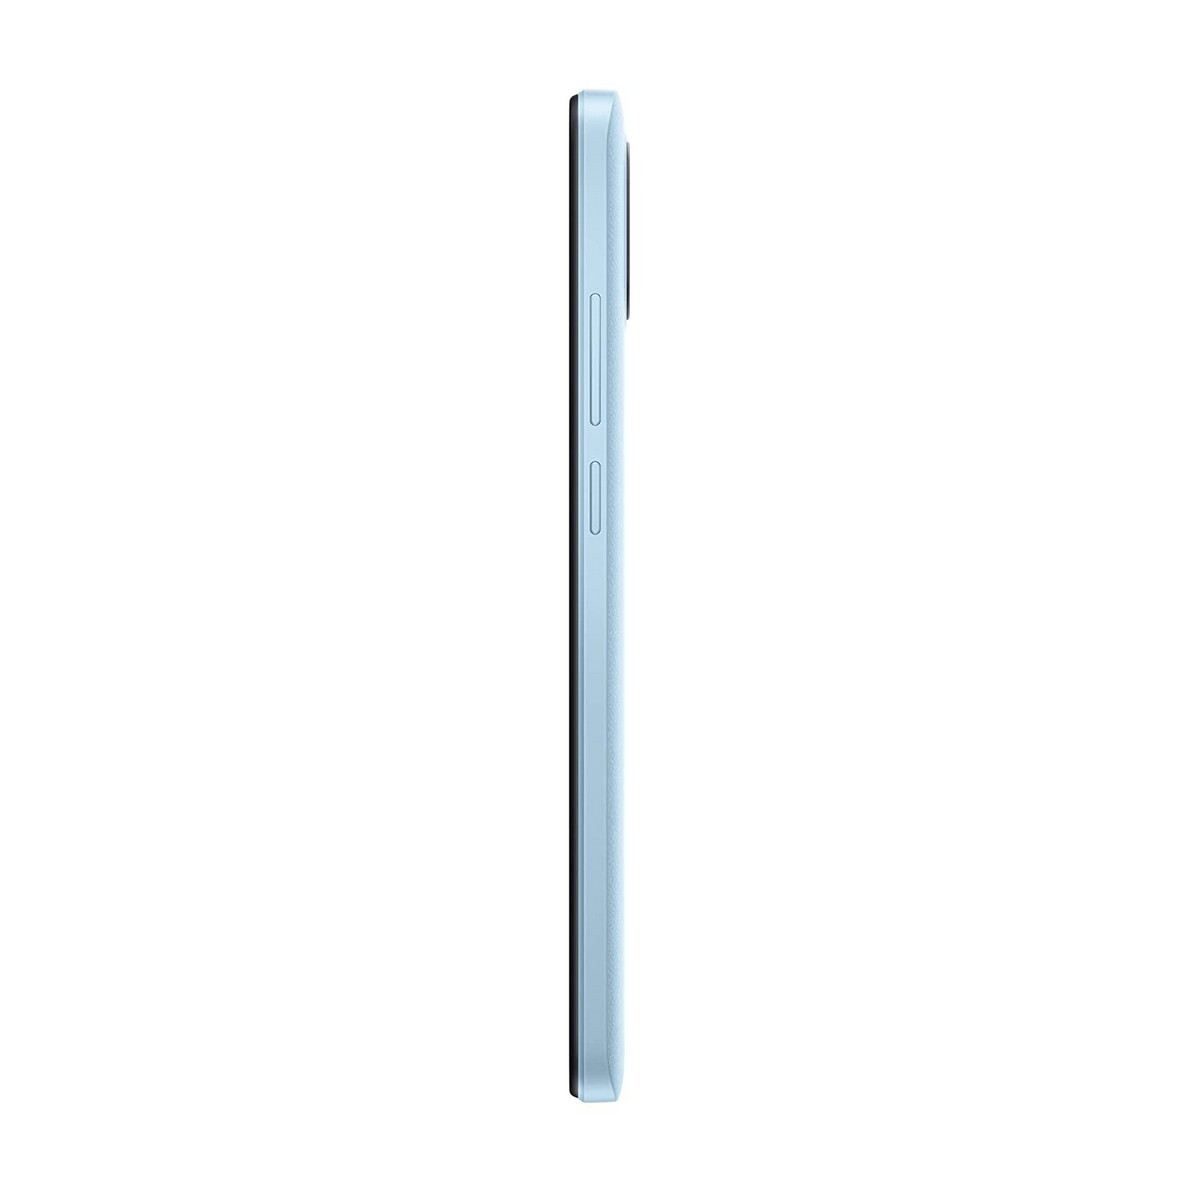 Xiaomi Mobile Phone A1 2/32 Storage, Blue